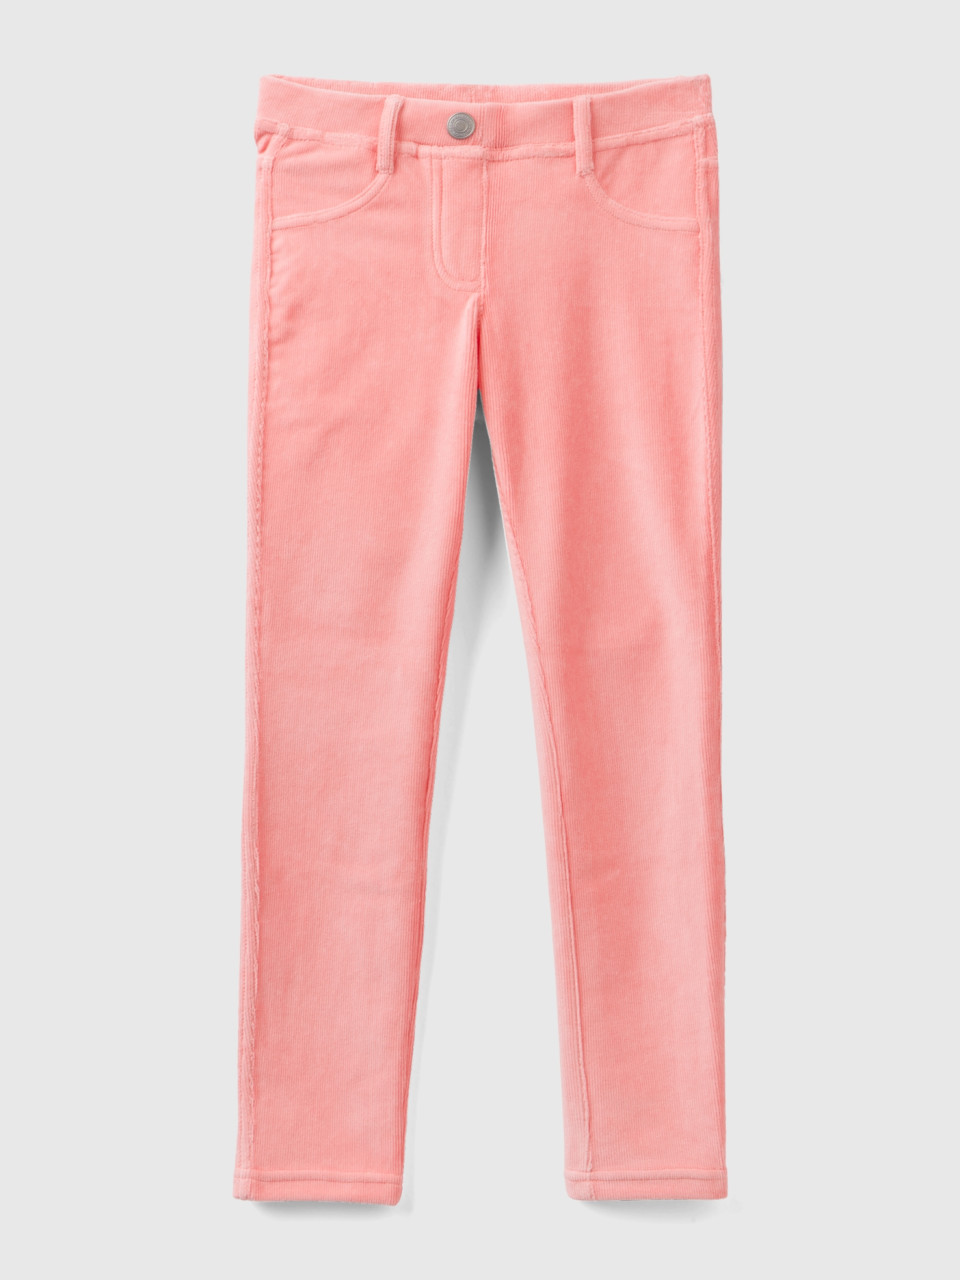 Benetton, Super Skinny Chenille Trousers, Pink, Kids